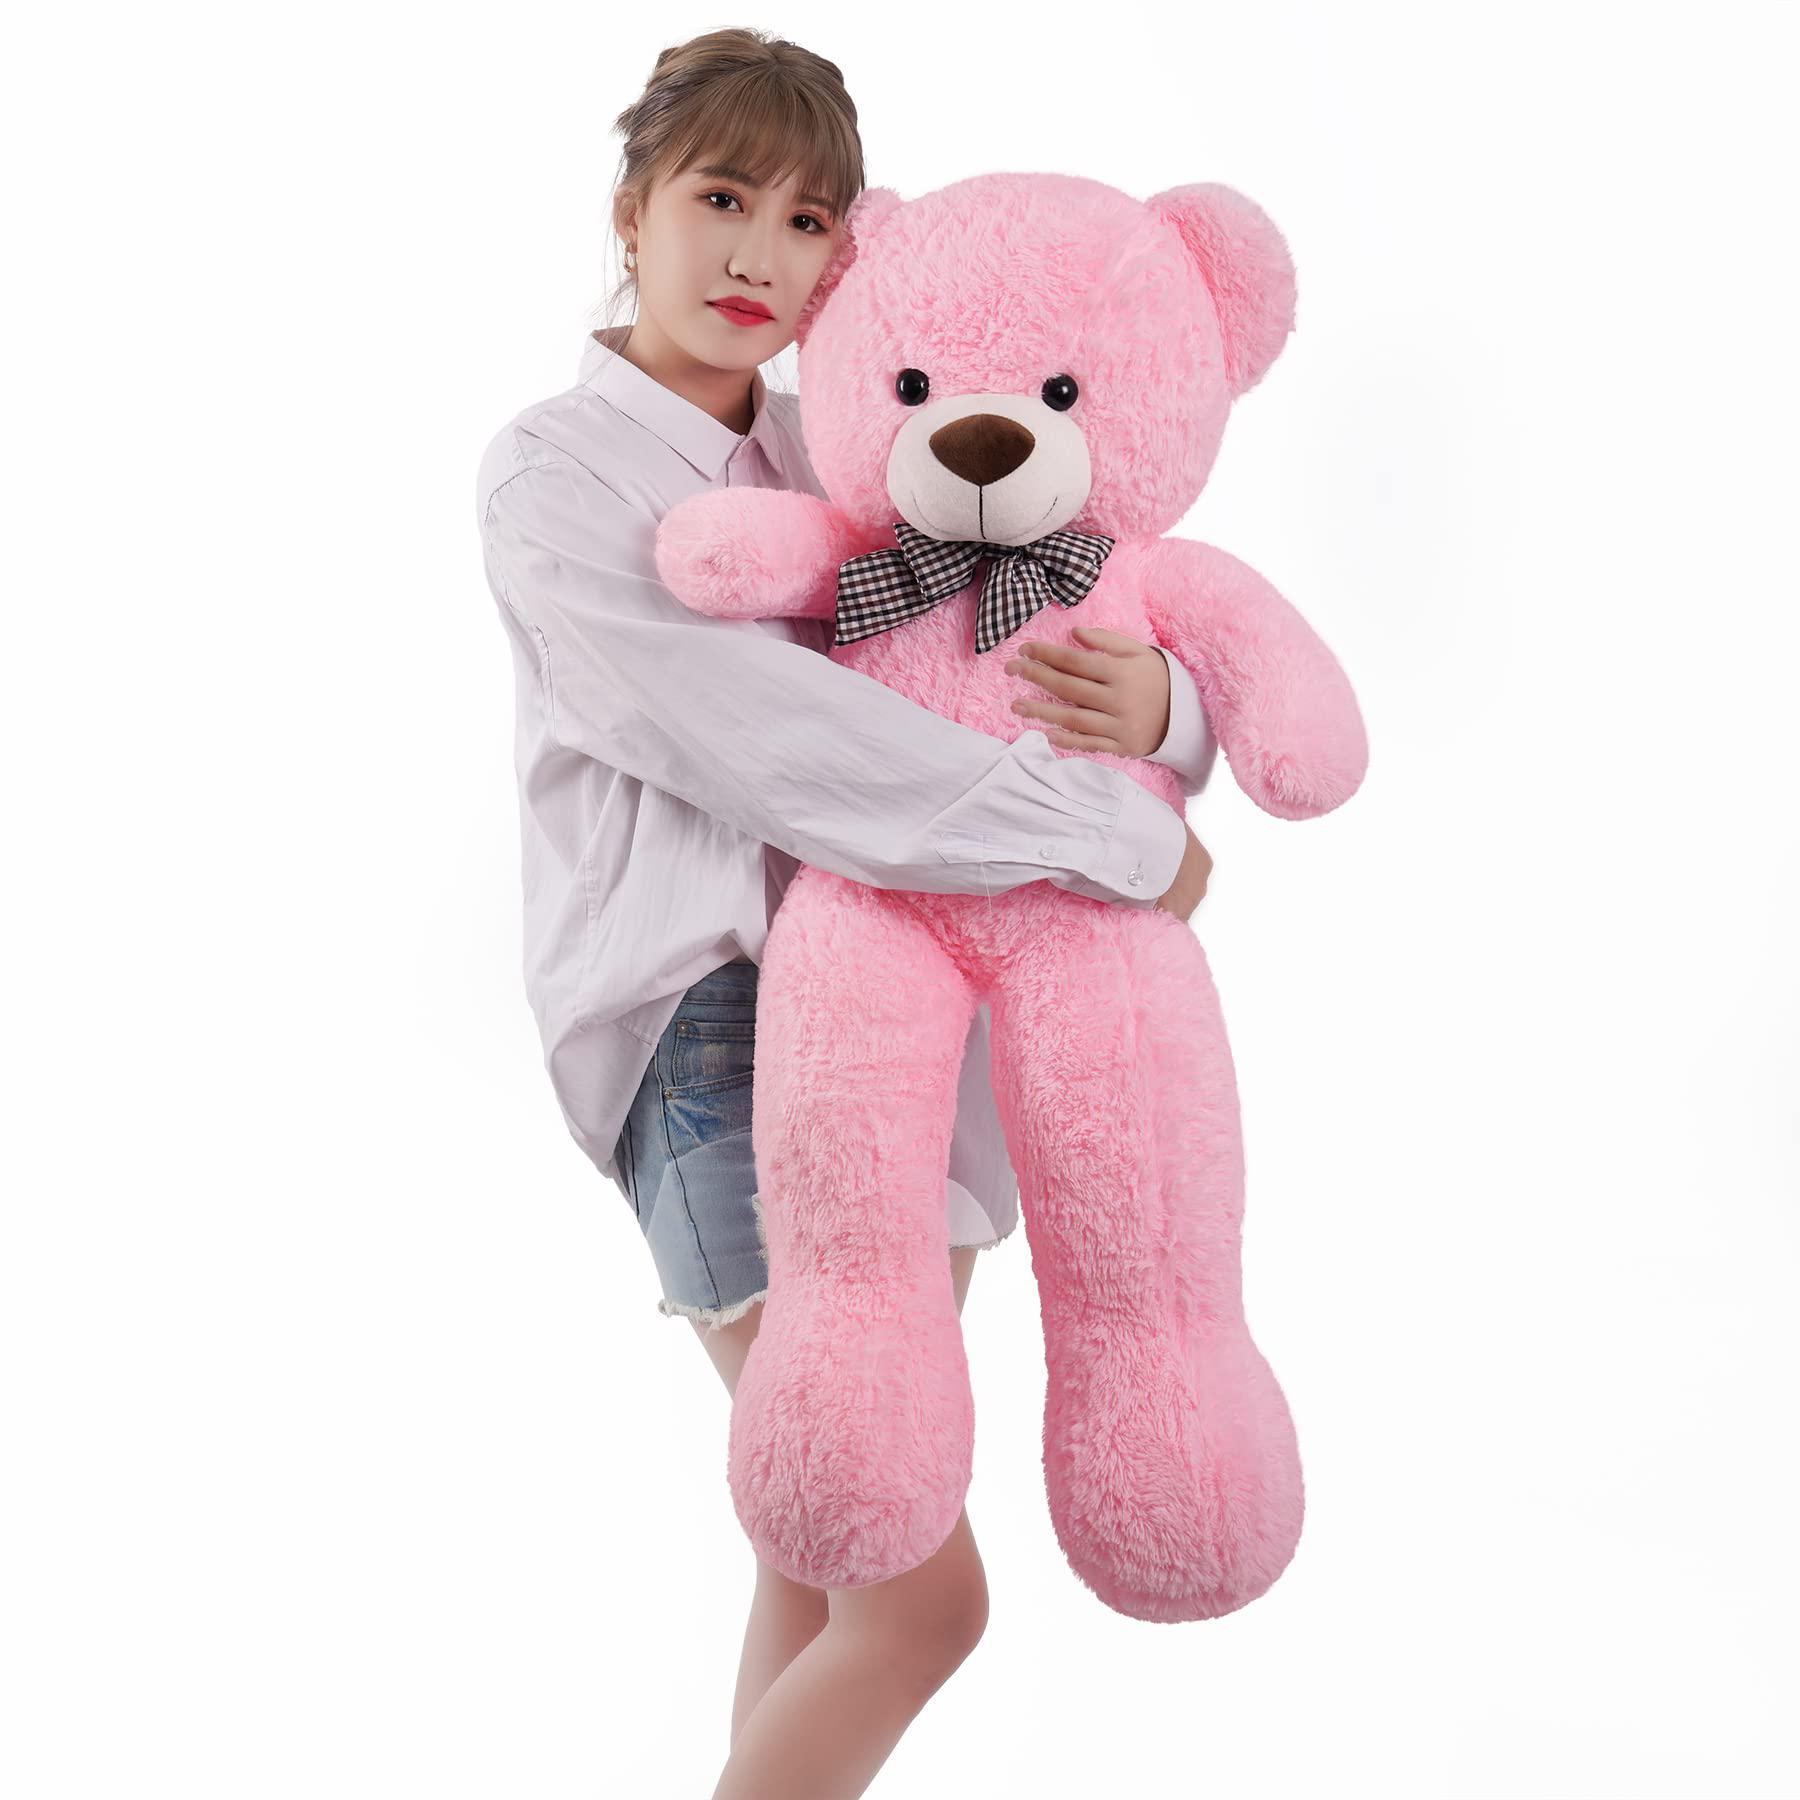 yeqivo giant teddy bear stuffed animals plush toy life size big plush pink teddy bear for kids girlfriend, soft stuffed bear animals